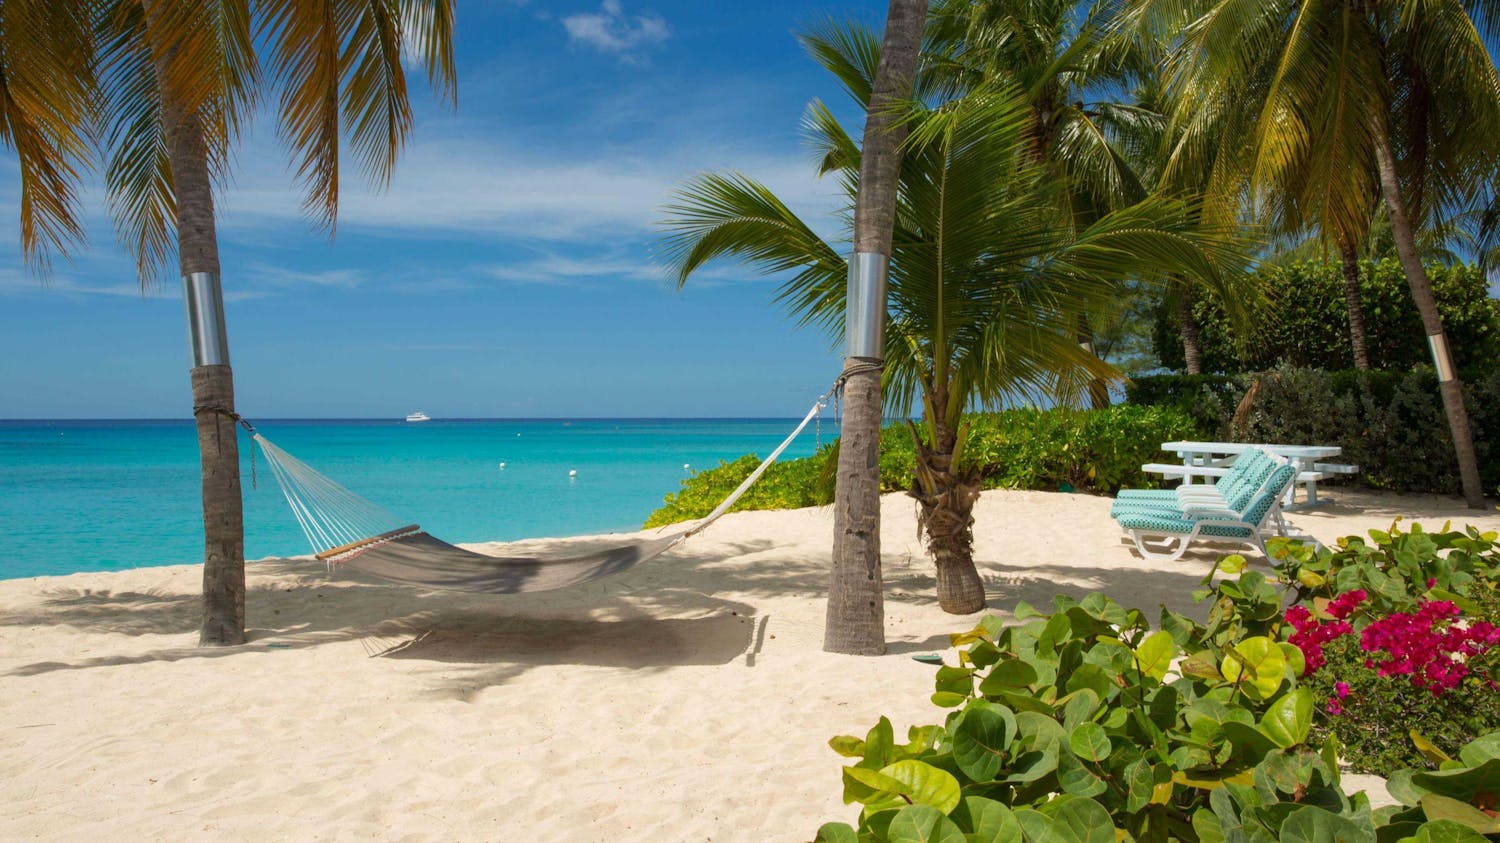 Cayman Islands beach hammock